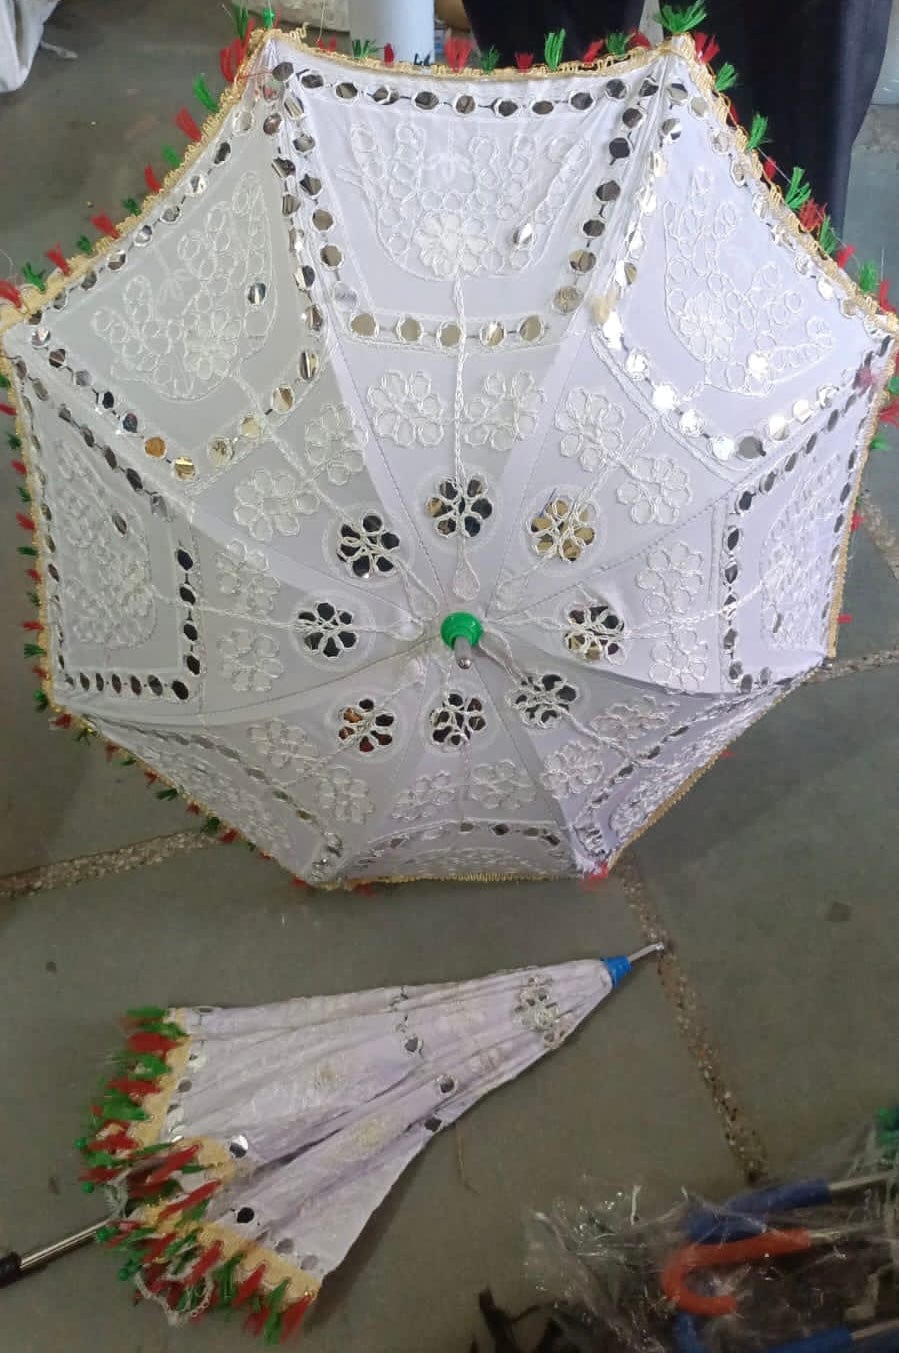 150 Rs each on buying 50+ pcs / WhatsApp at 8619550223 decor umbrella LAMANSH® White 🤍 Elephant Embroidered Wedding decoration Umbrellas for ceiling & backdrops / Rajasthani umbrella's 🌂 for Indian wedding